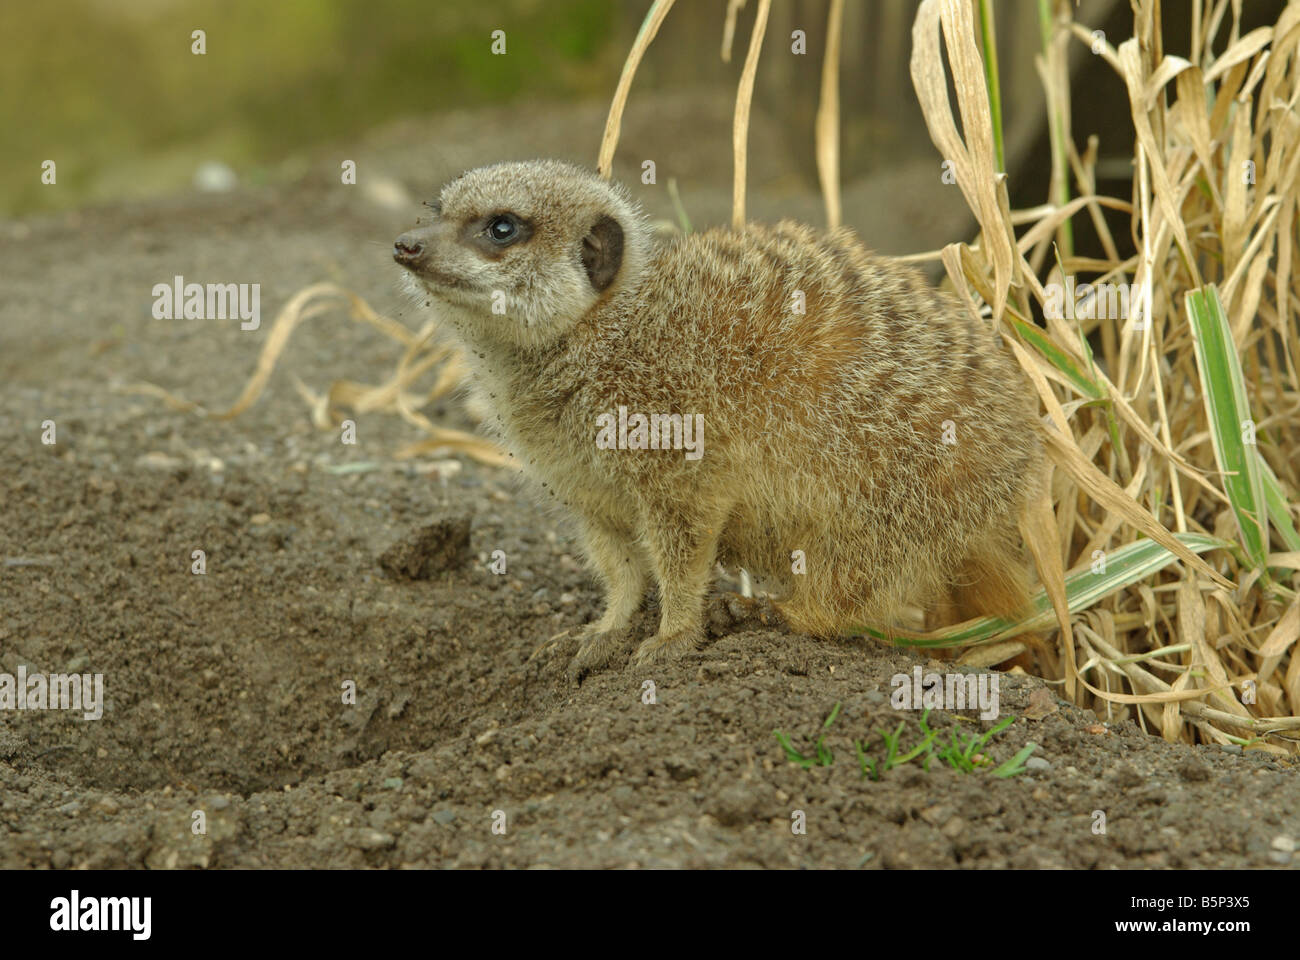 A meerkat or suricate, Suricata suricatta. Stock Photo